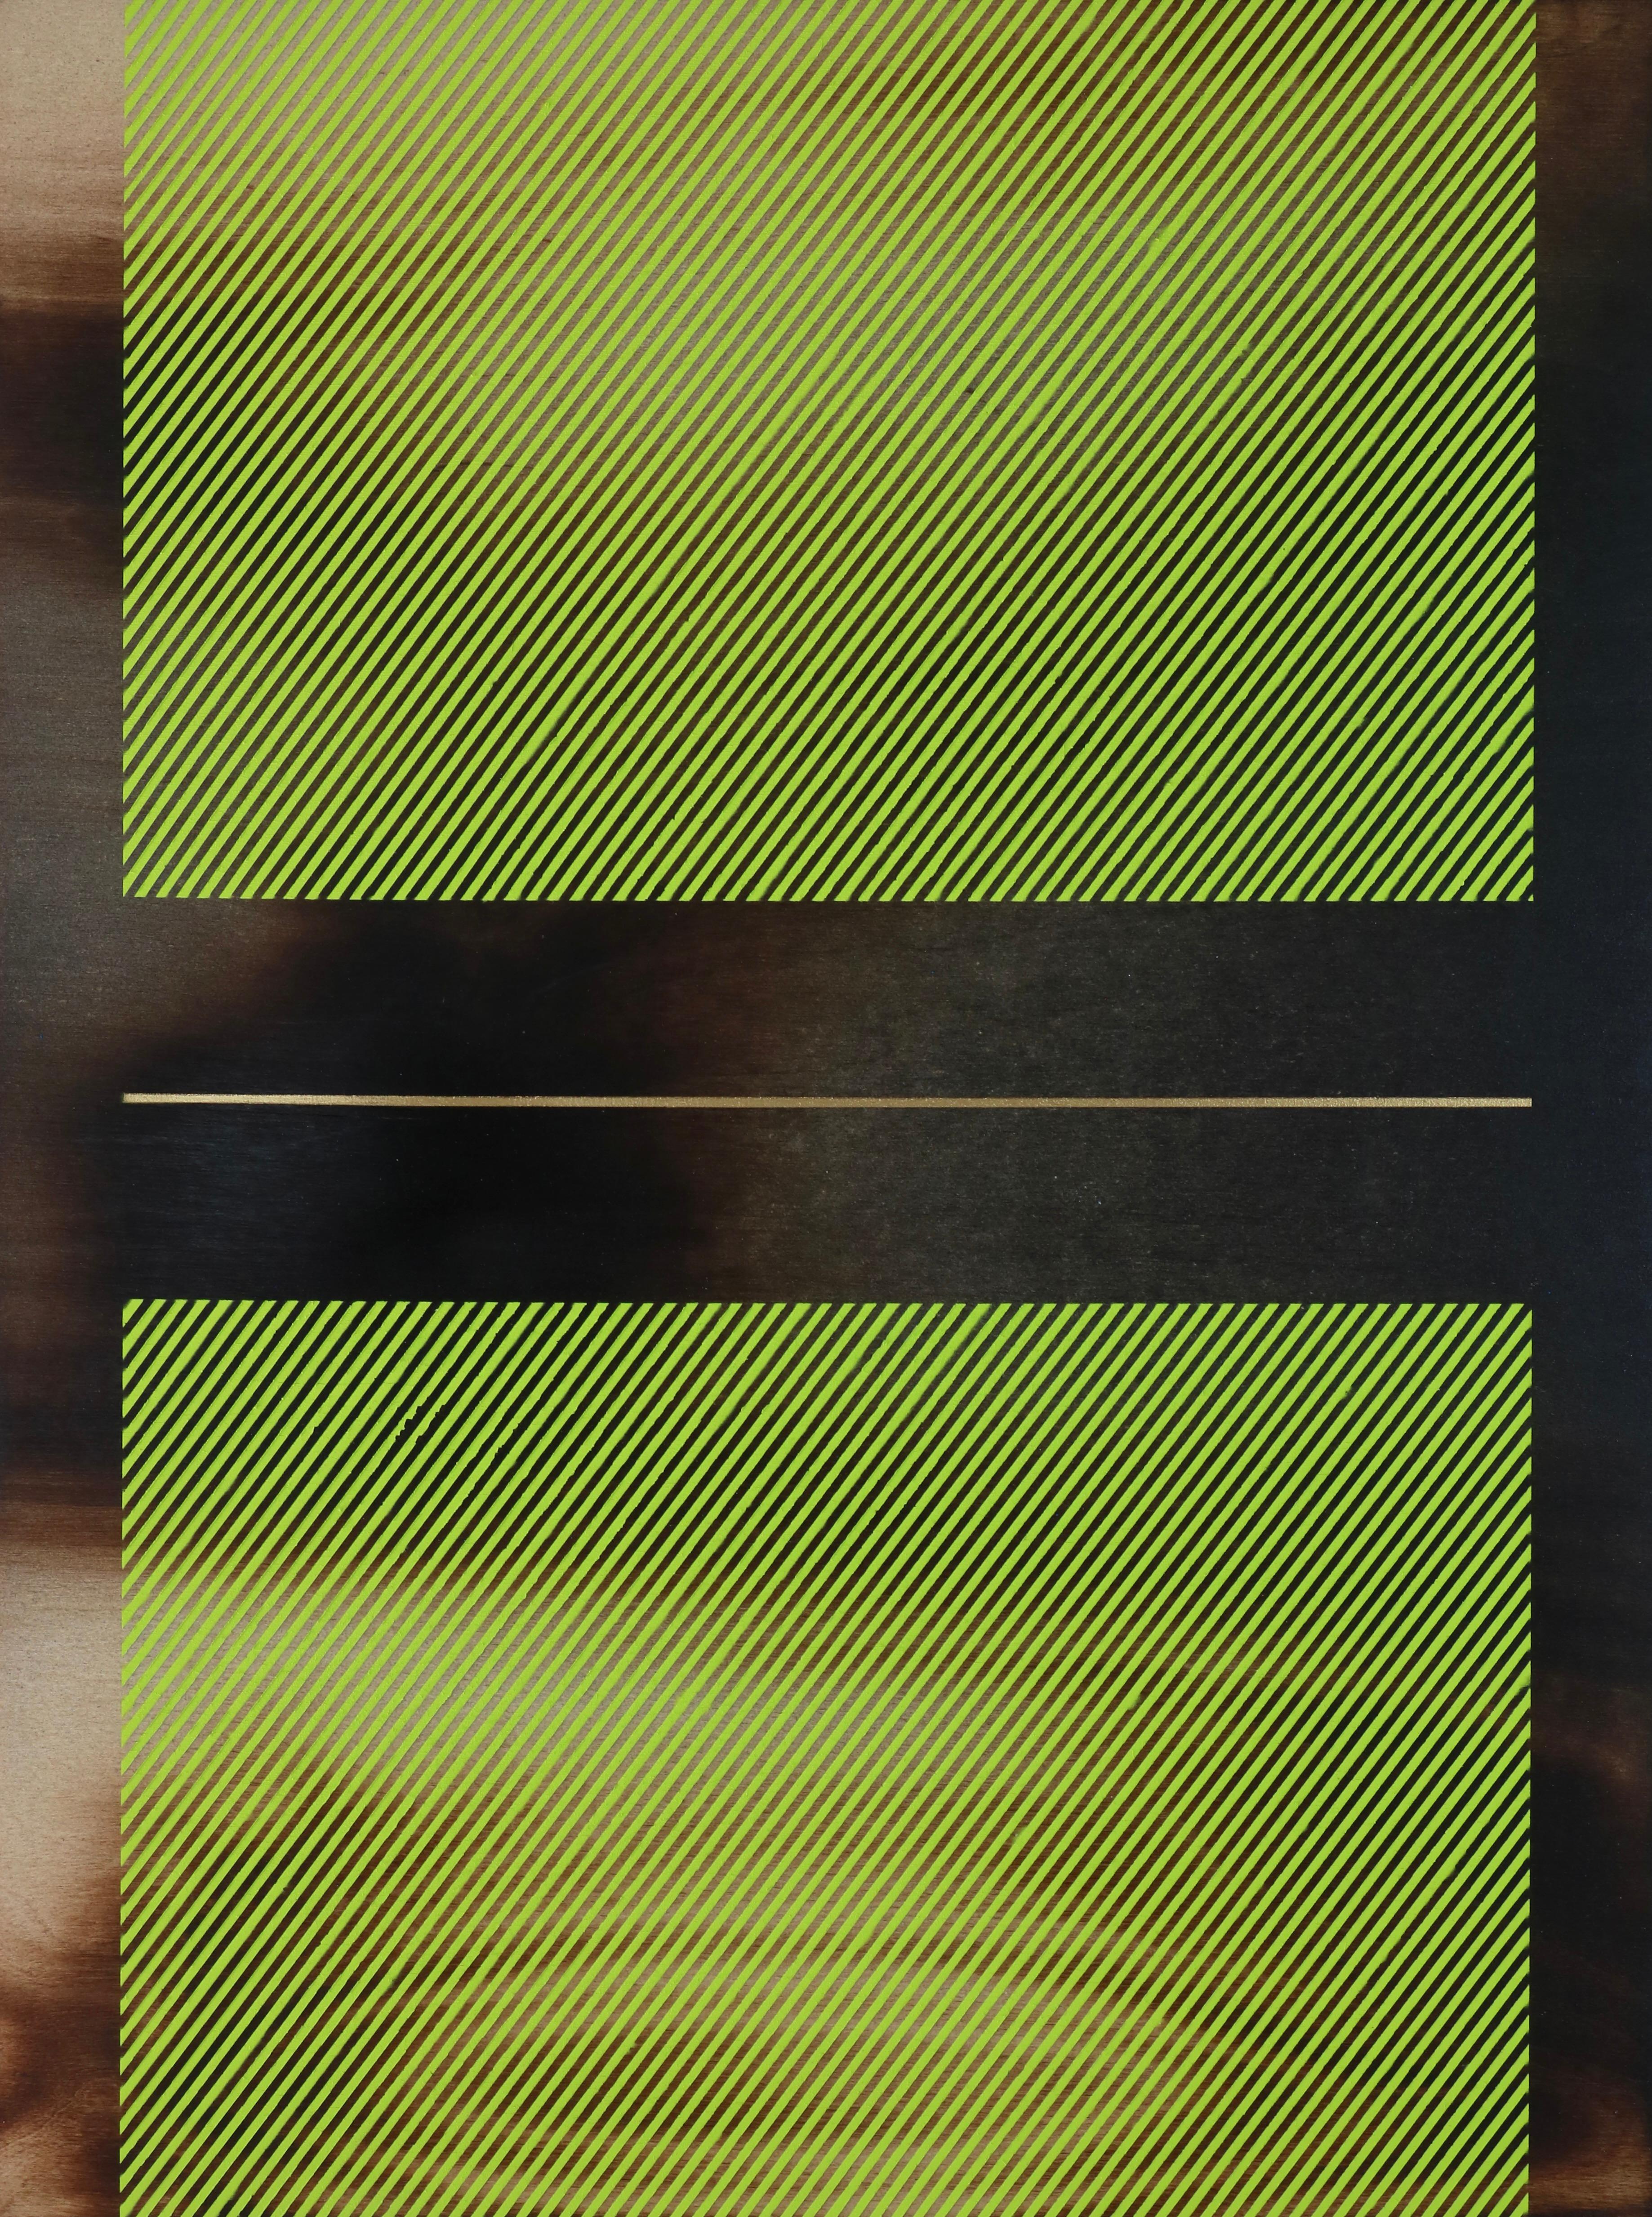 Mångata chartreuse gelb (Gittermalerei minimal Holz hard-edge dopamine vibrant